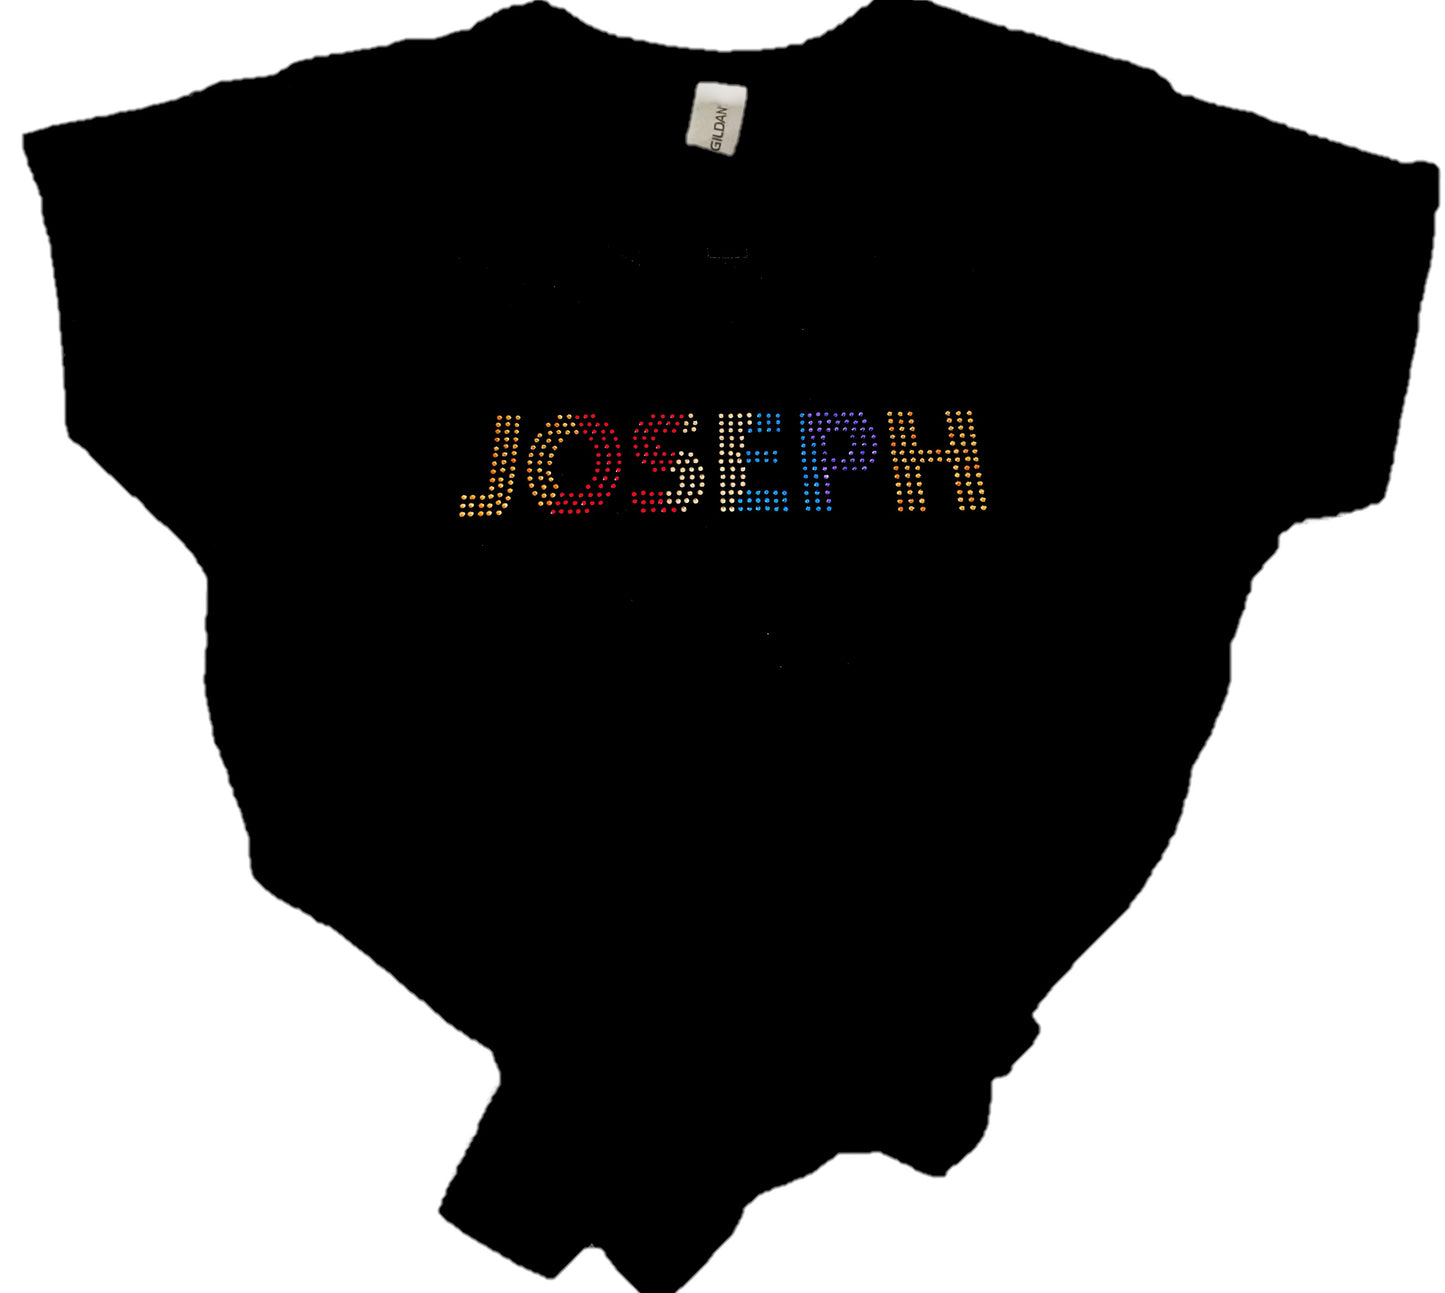 Joseph T-shirt adult